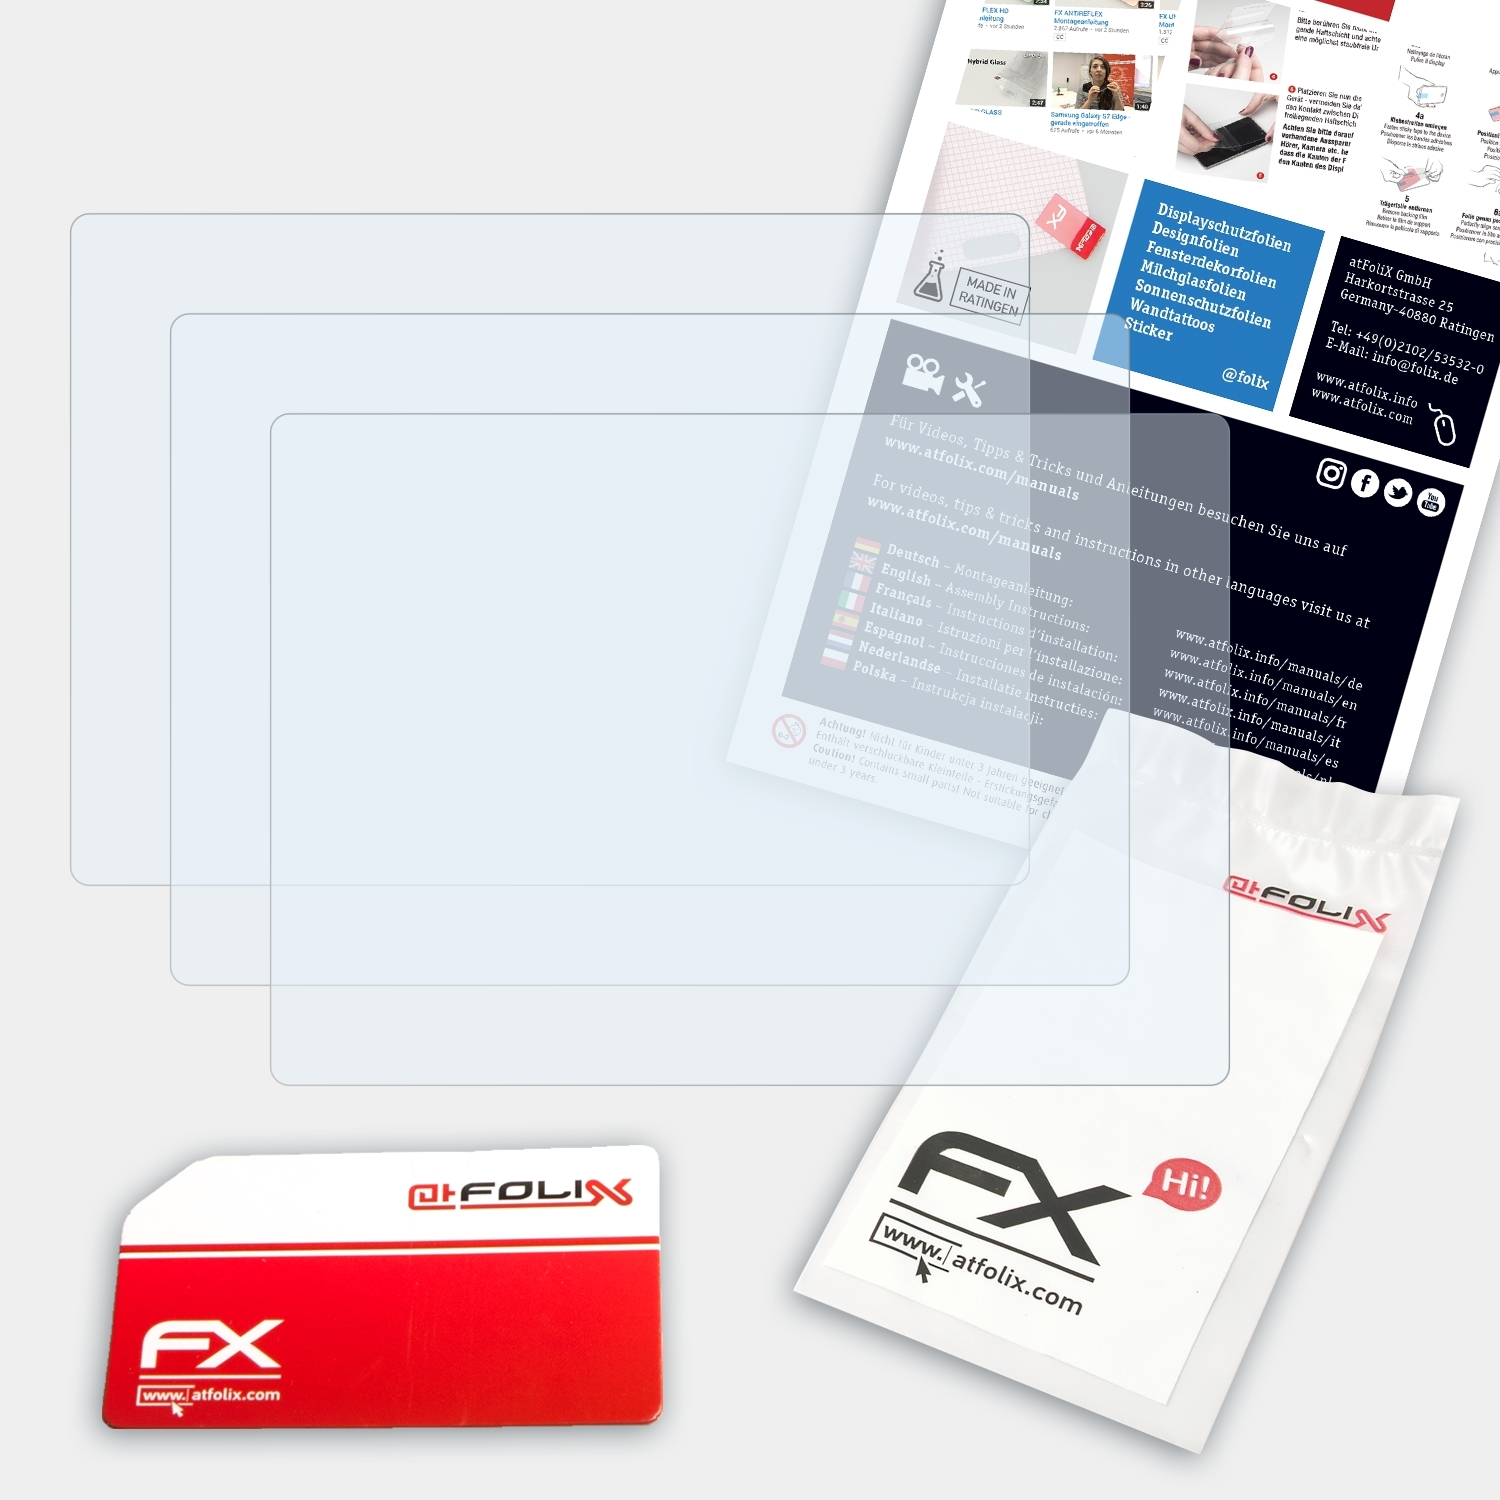 Ricoh Q-S1) ATFOLIX FX-Clear 3x Pentax Displayschutz(für